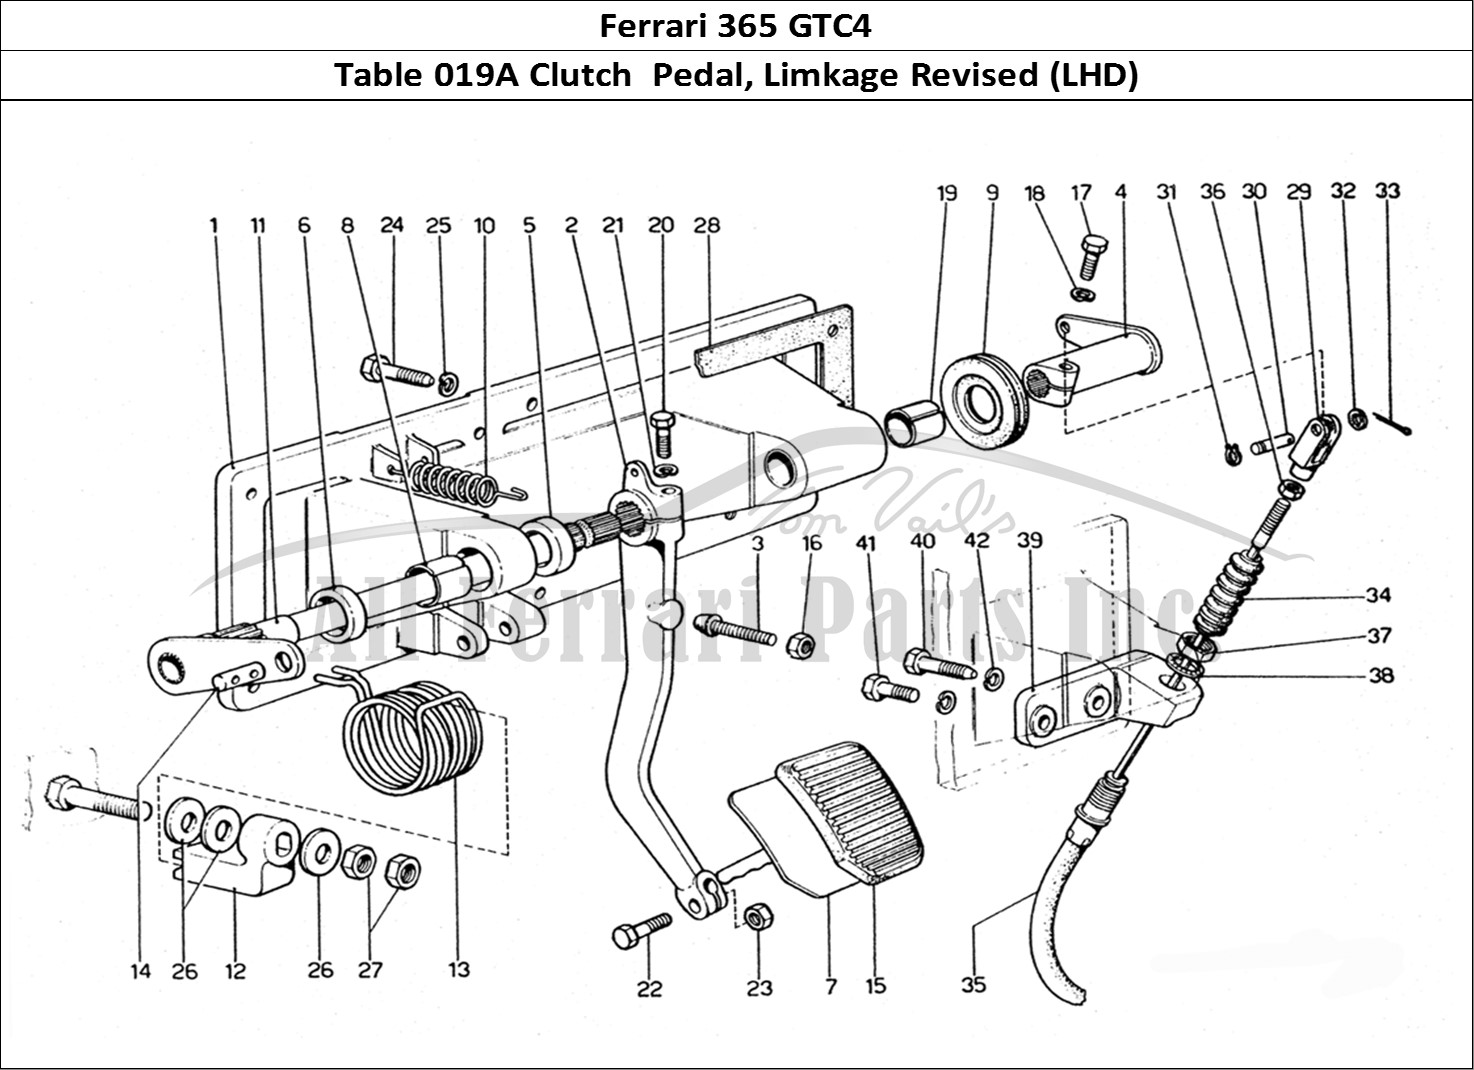 Ferrari Parts Ferrari 365 GTC4 (Mechanical) Page 019 Clutch pedal - Revision (